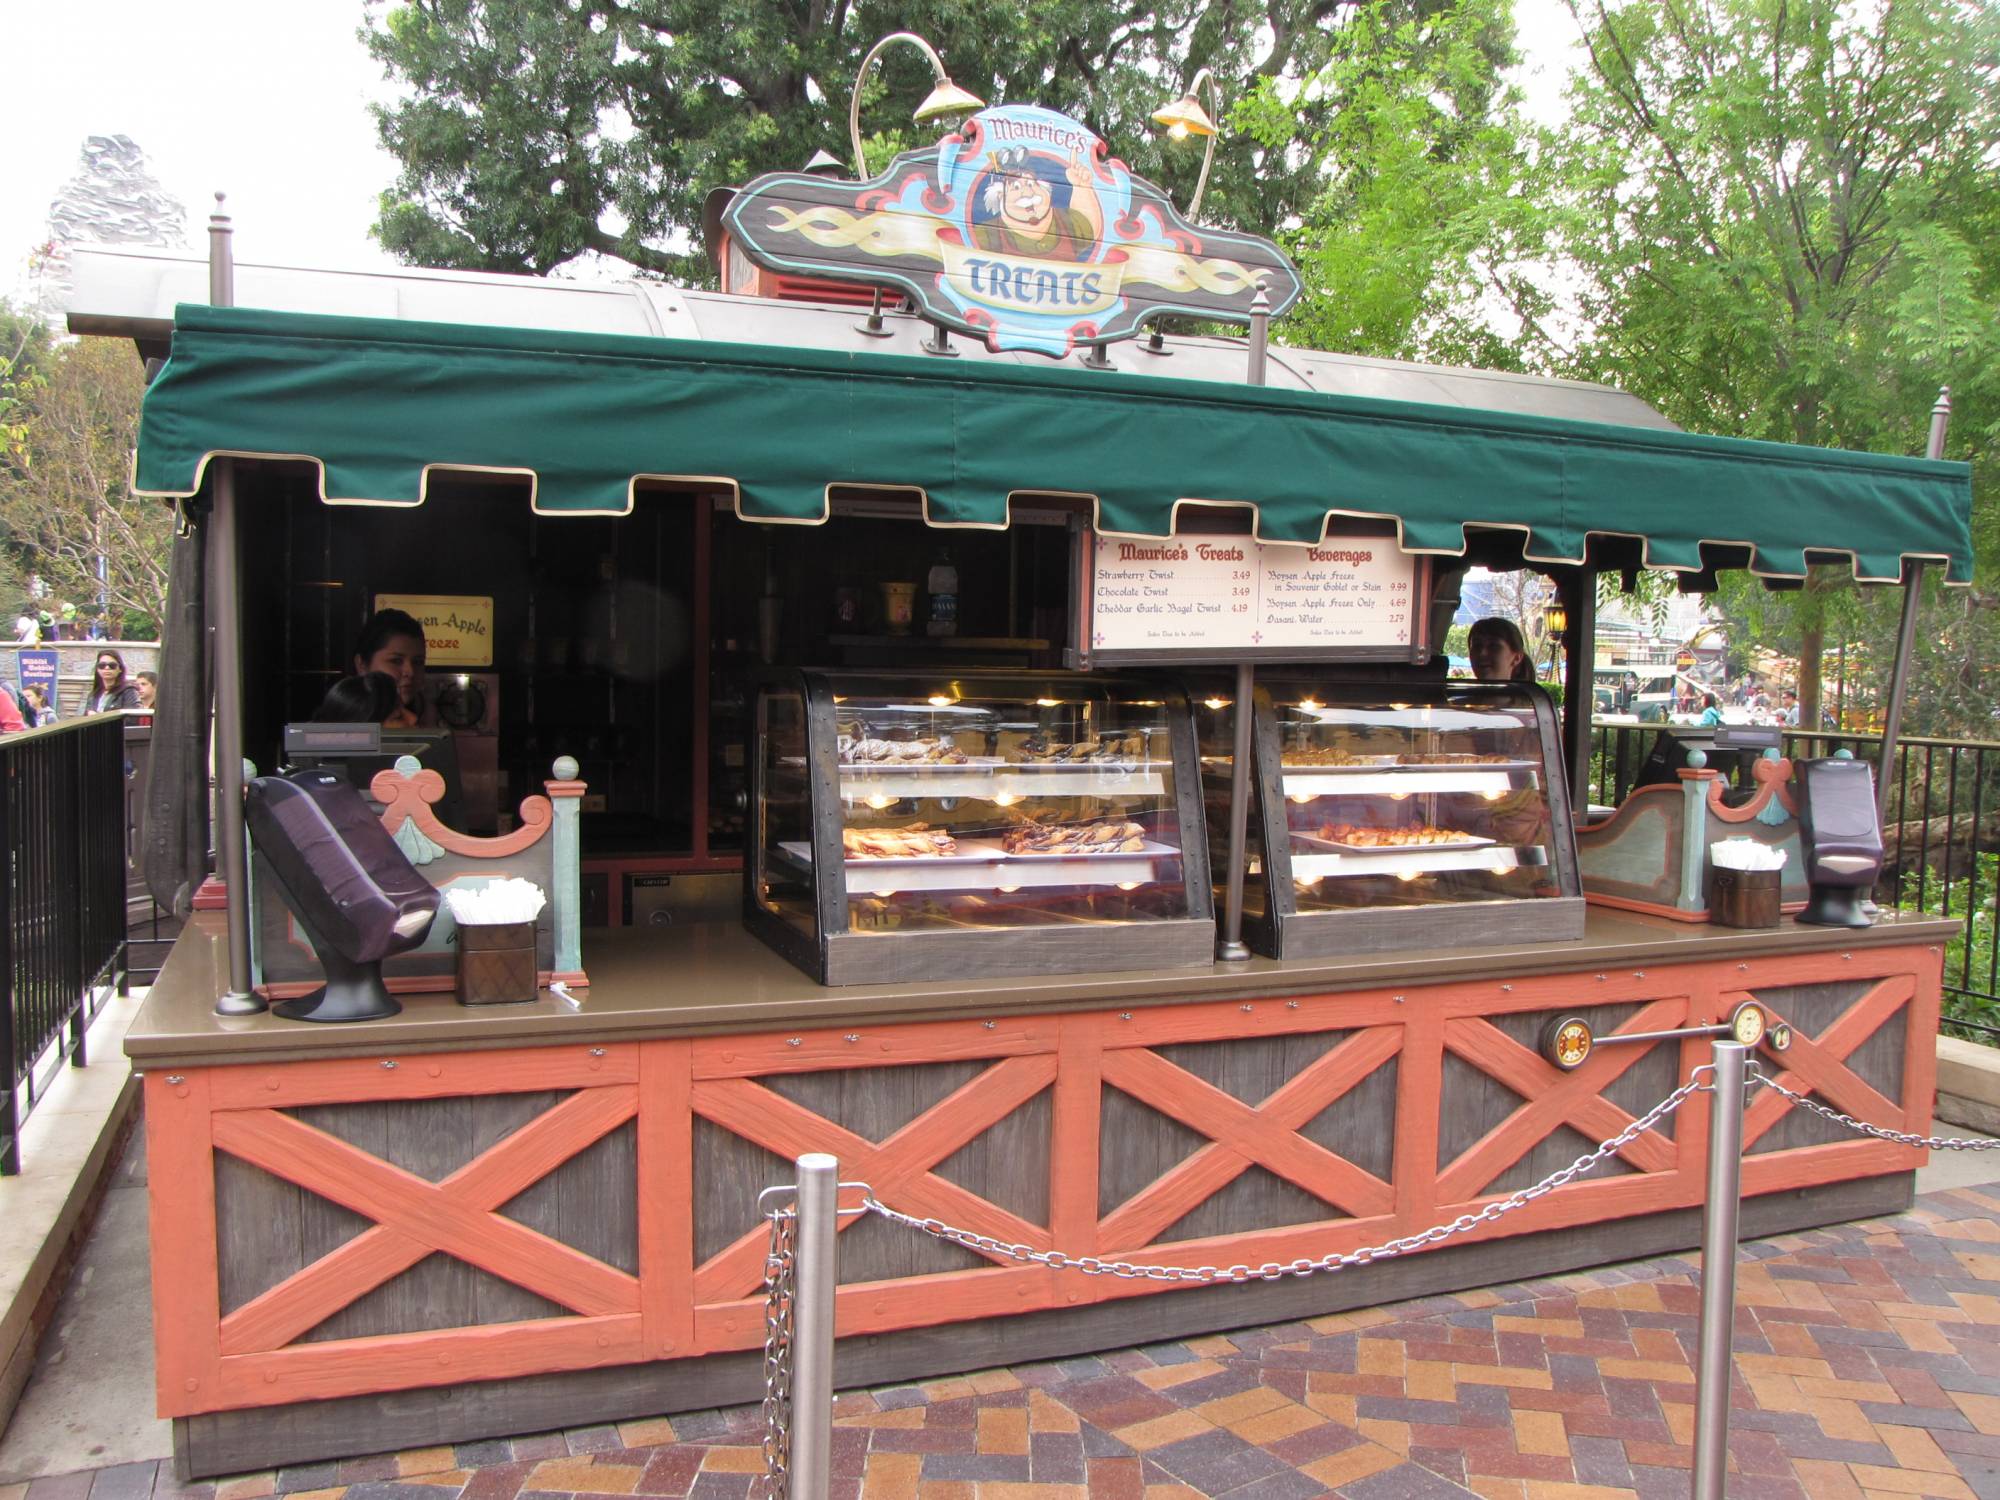 Explore snacks with a twist at Maurice's Treat at Disneyland |PassPorter.com